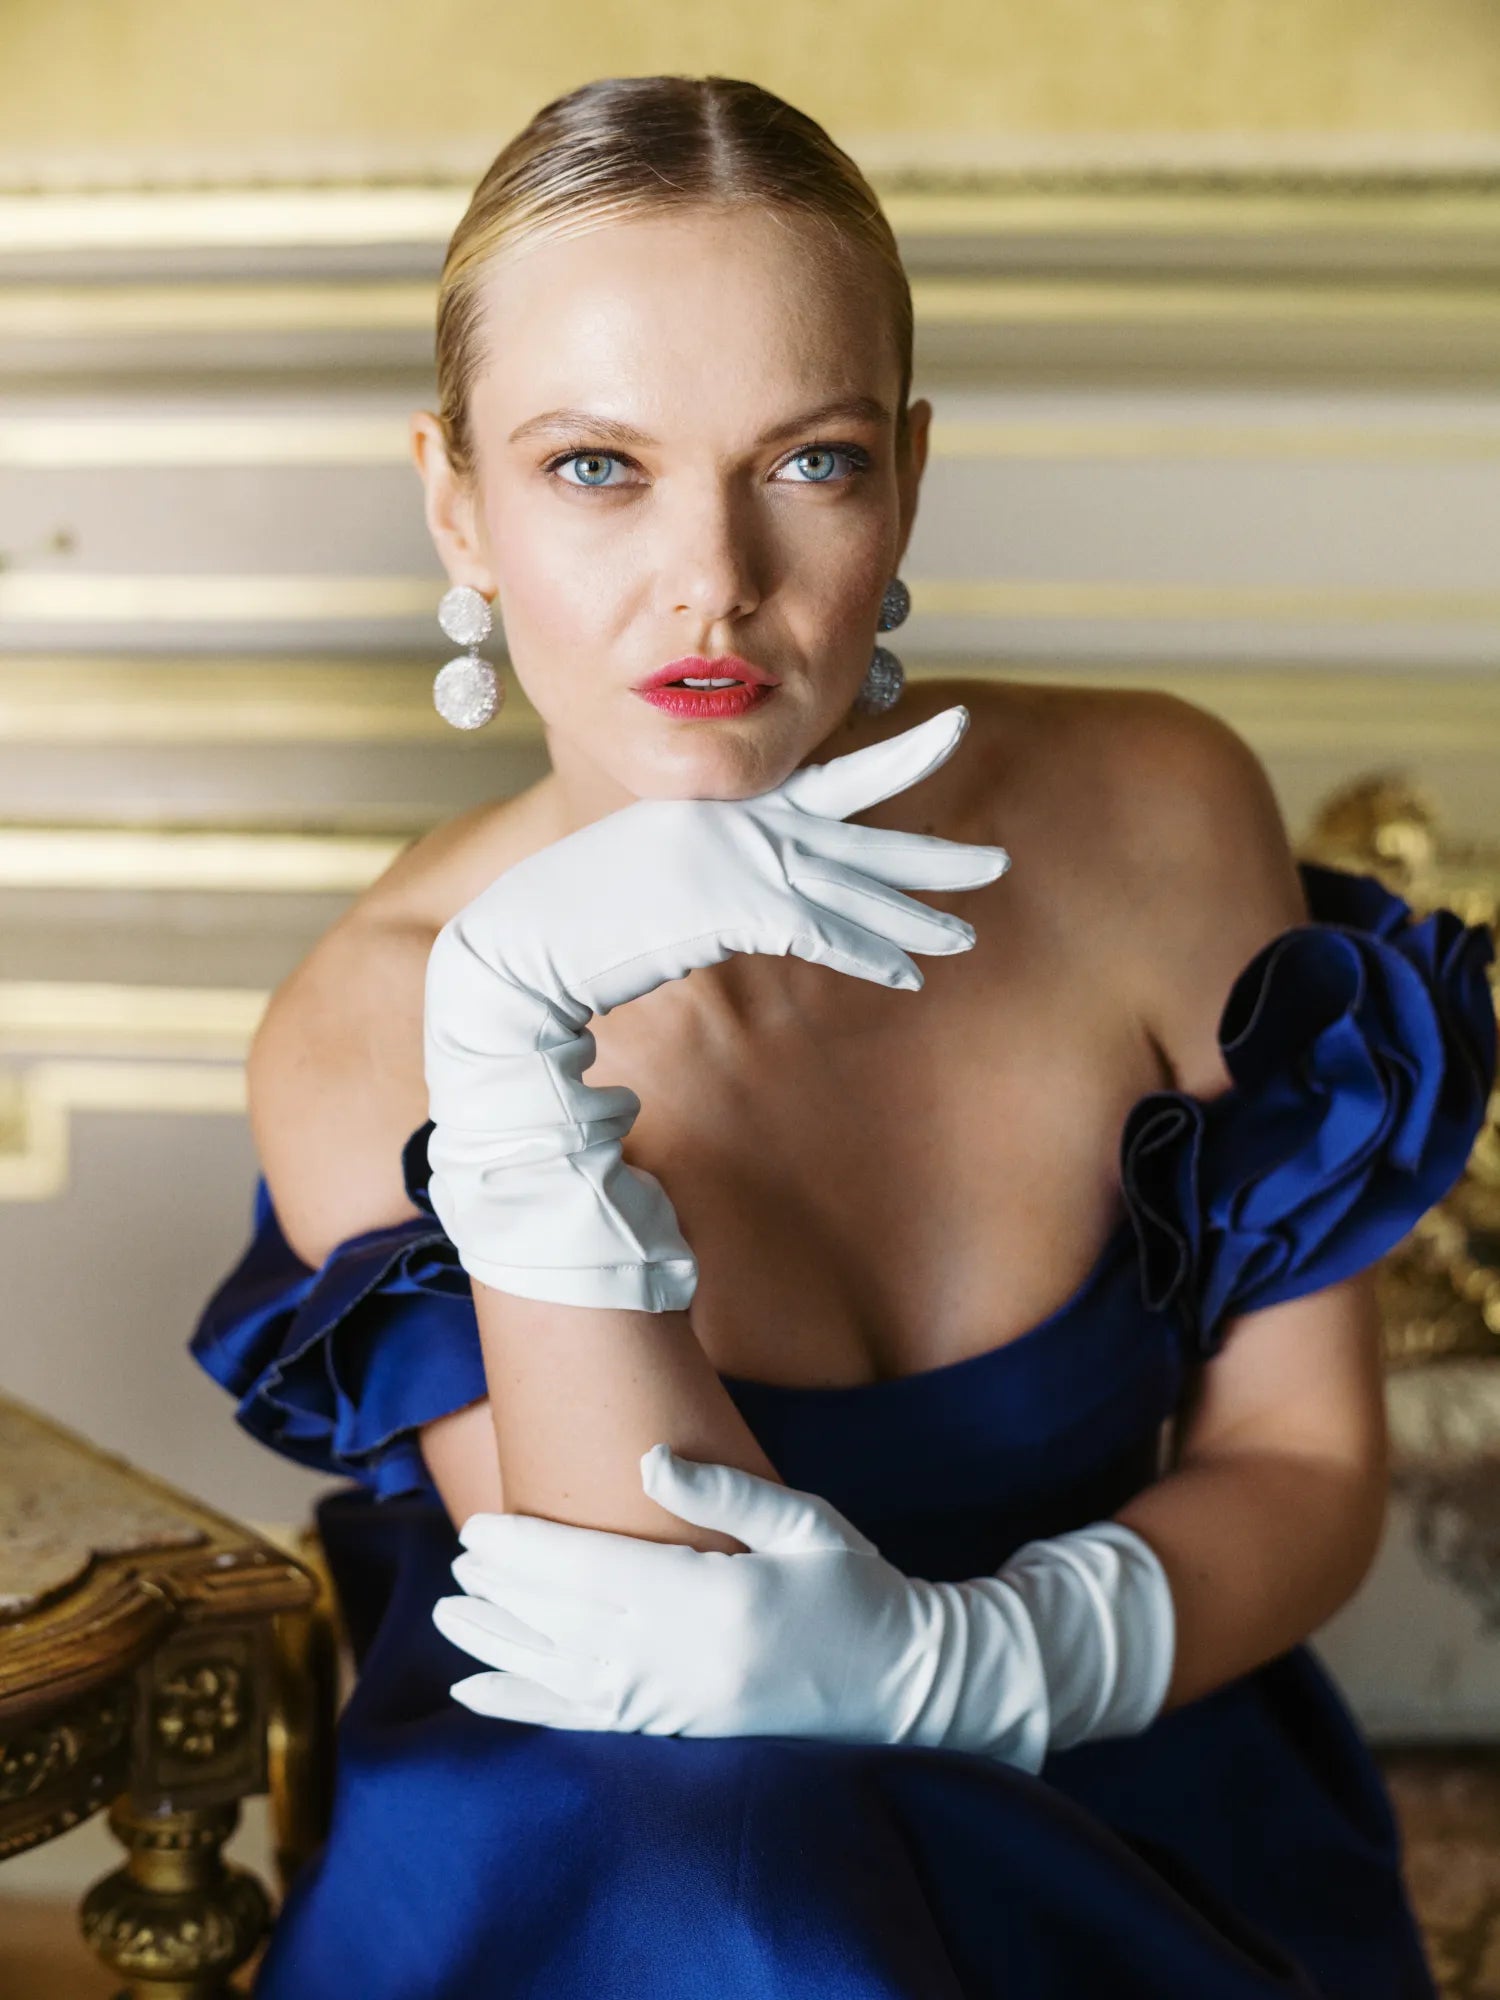 files/black-tie-event-gloves-women.webp